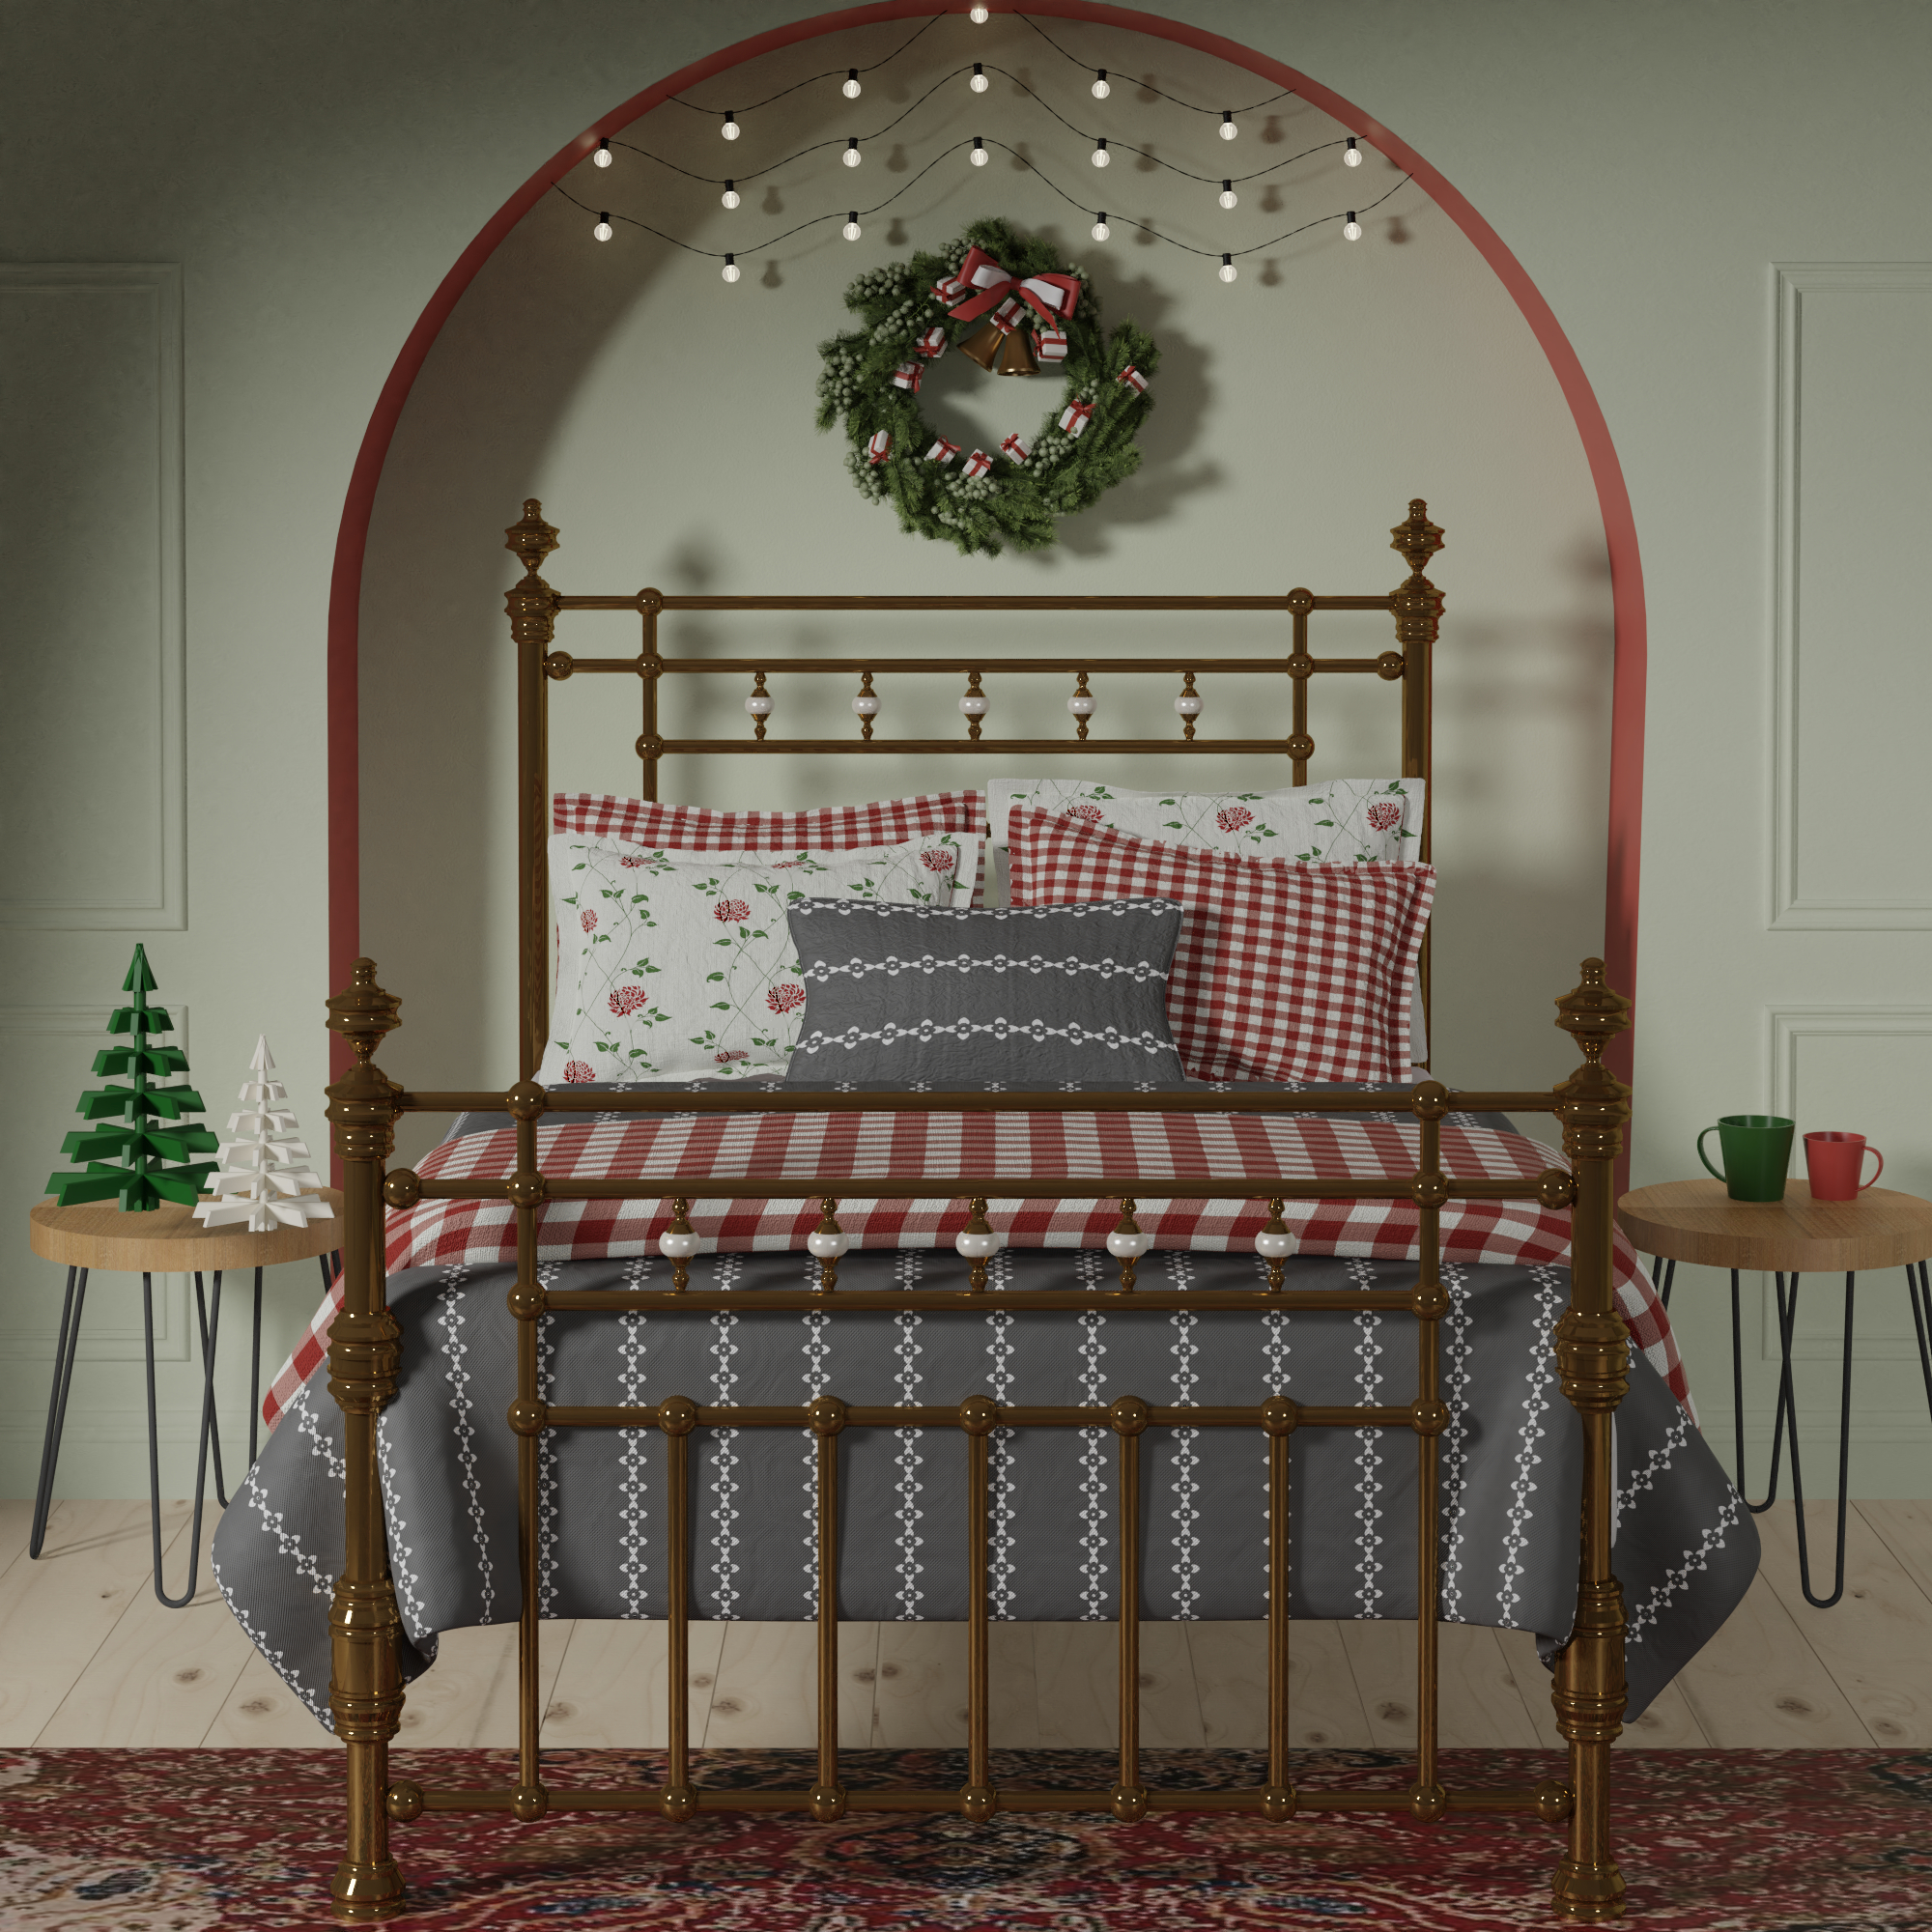 Boyne brass bed - Image Christmas 2021